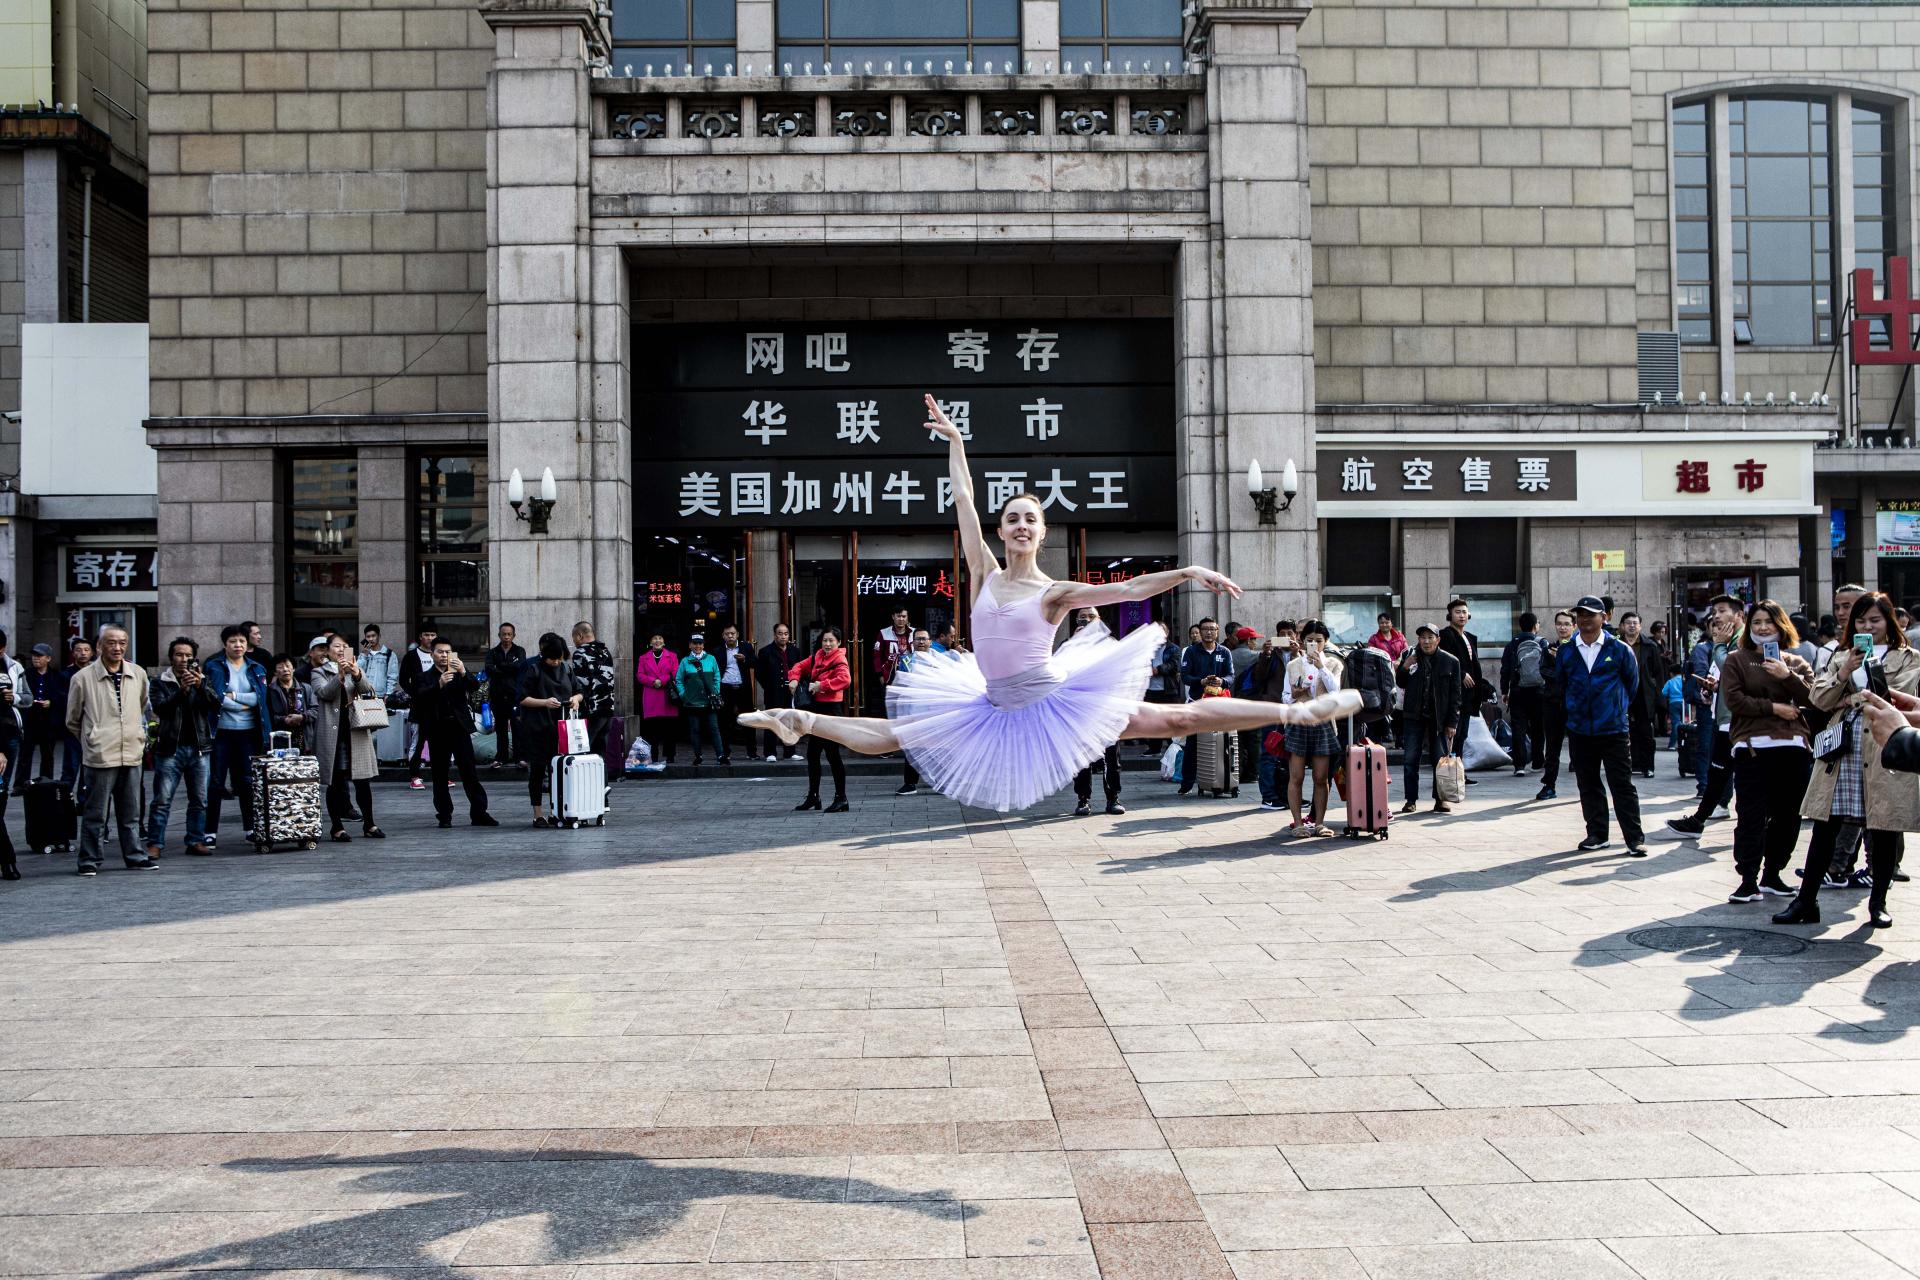 London Photography Awards Winner - Dancers in the streets: The Australian Ballet